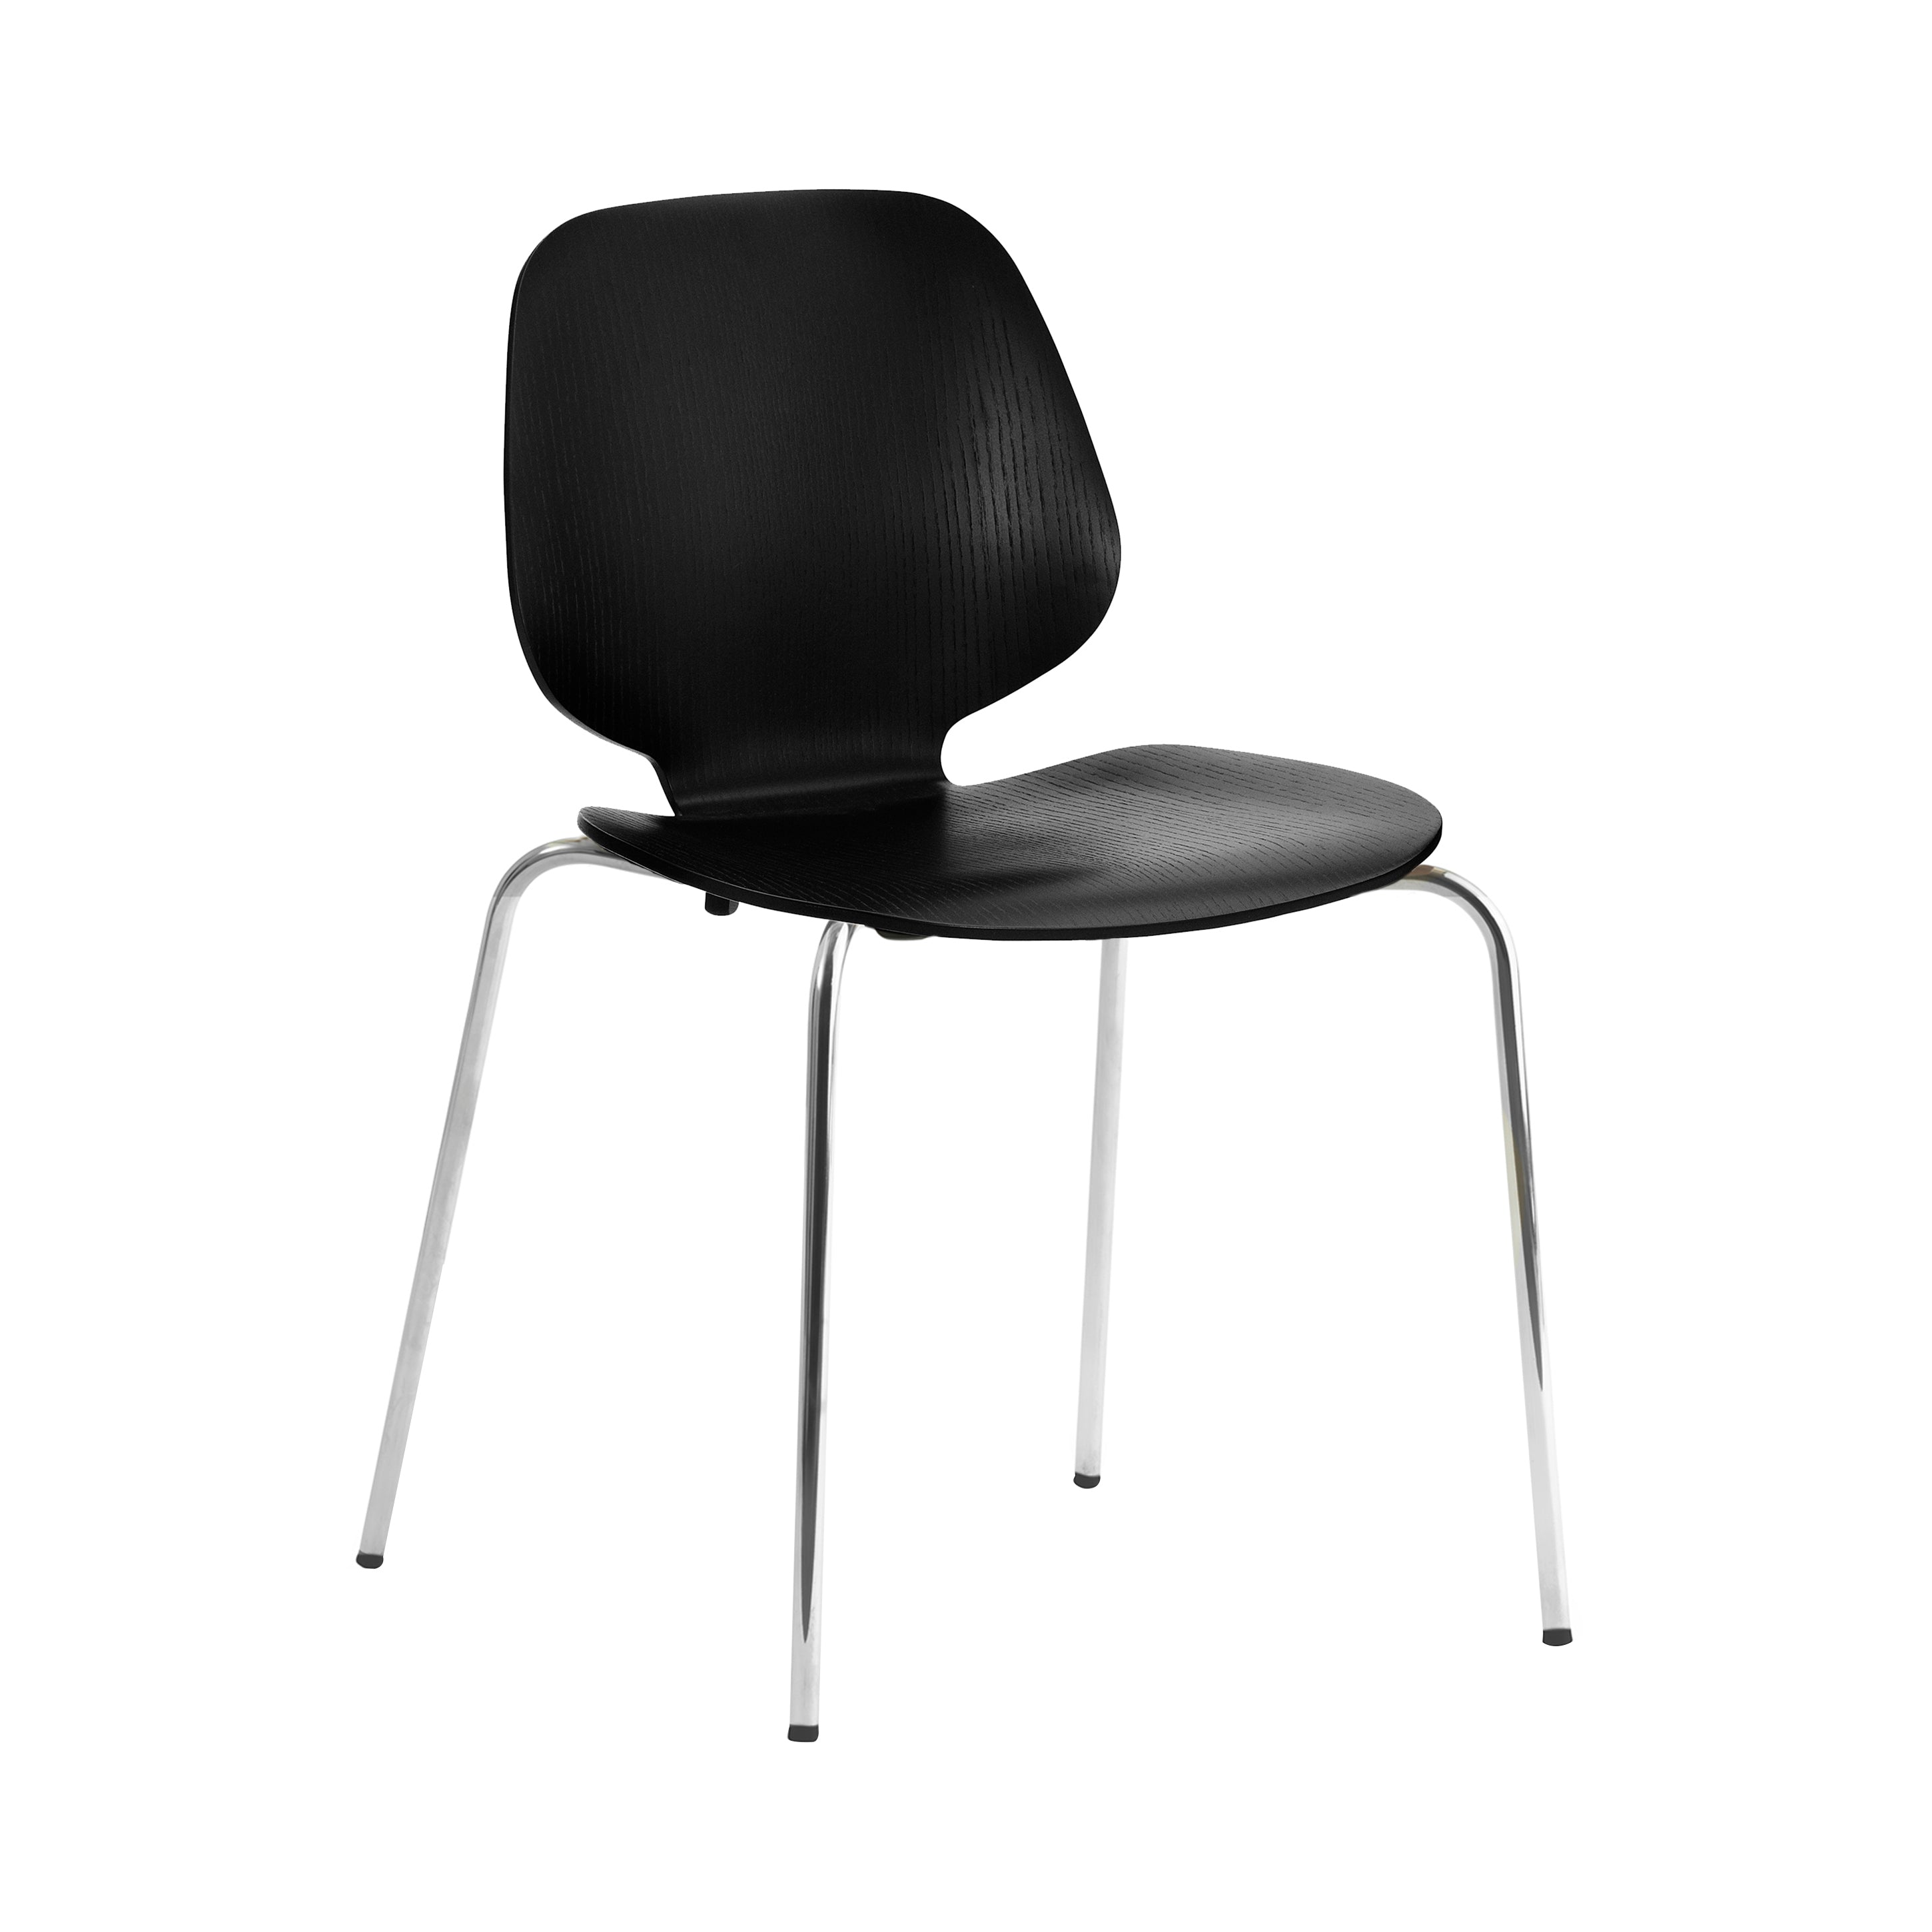 My Chair: Metal Base + Black + Chrome